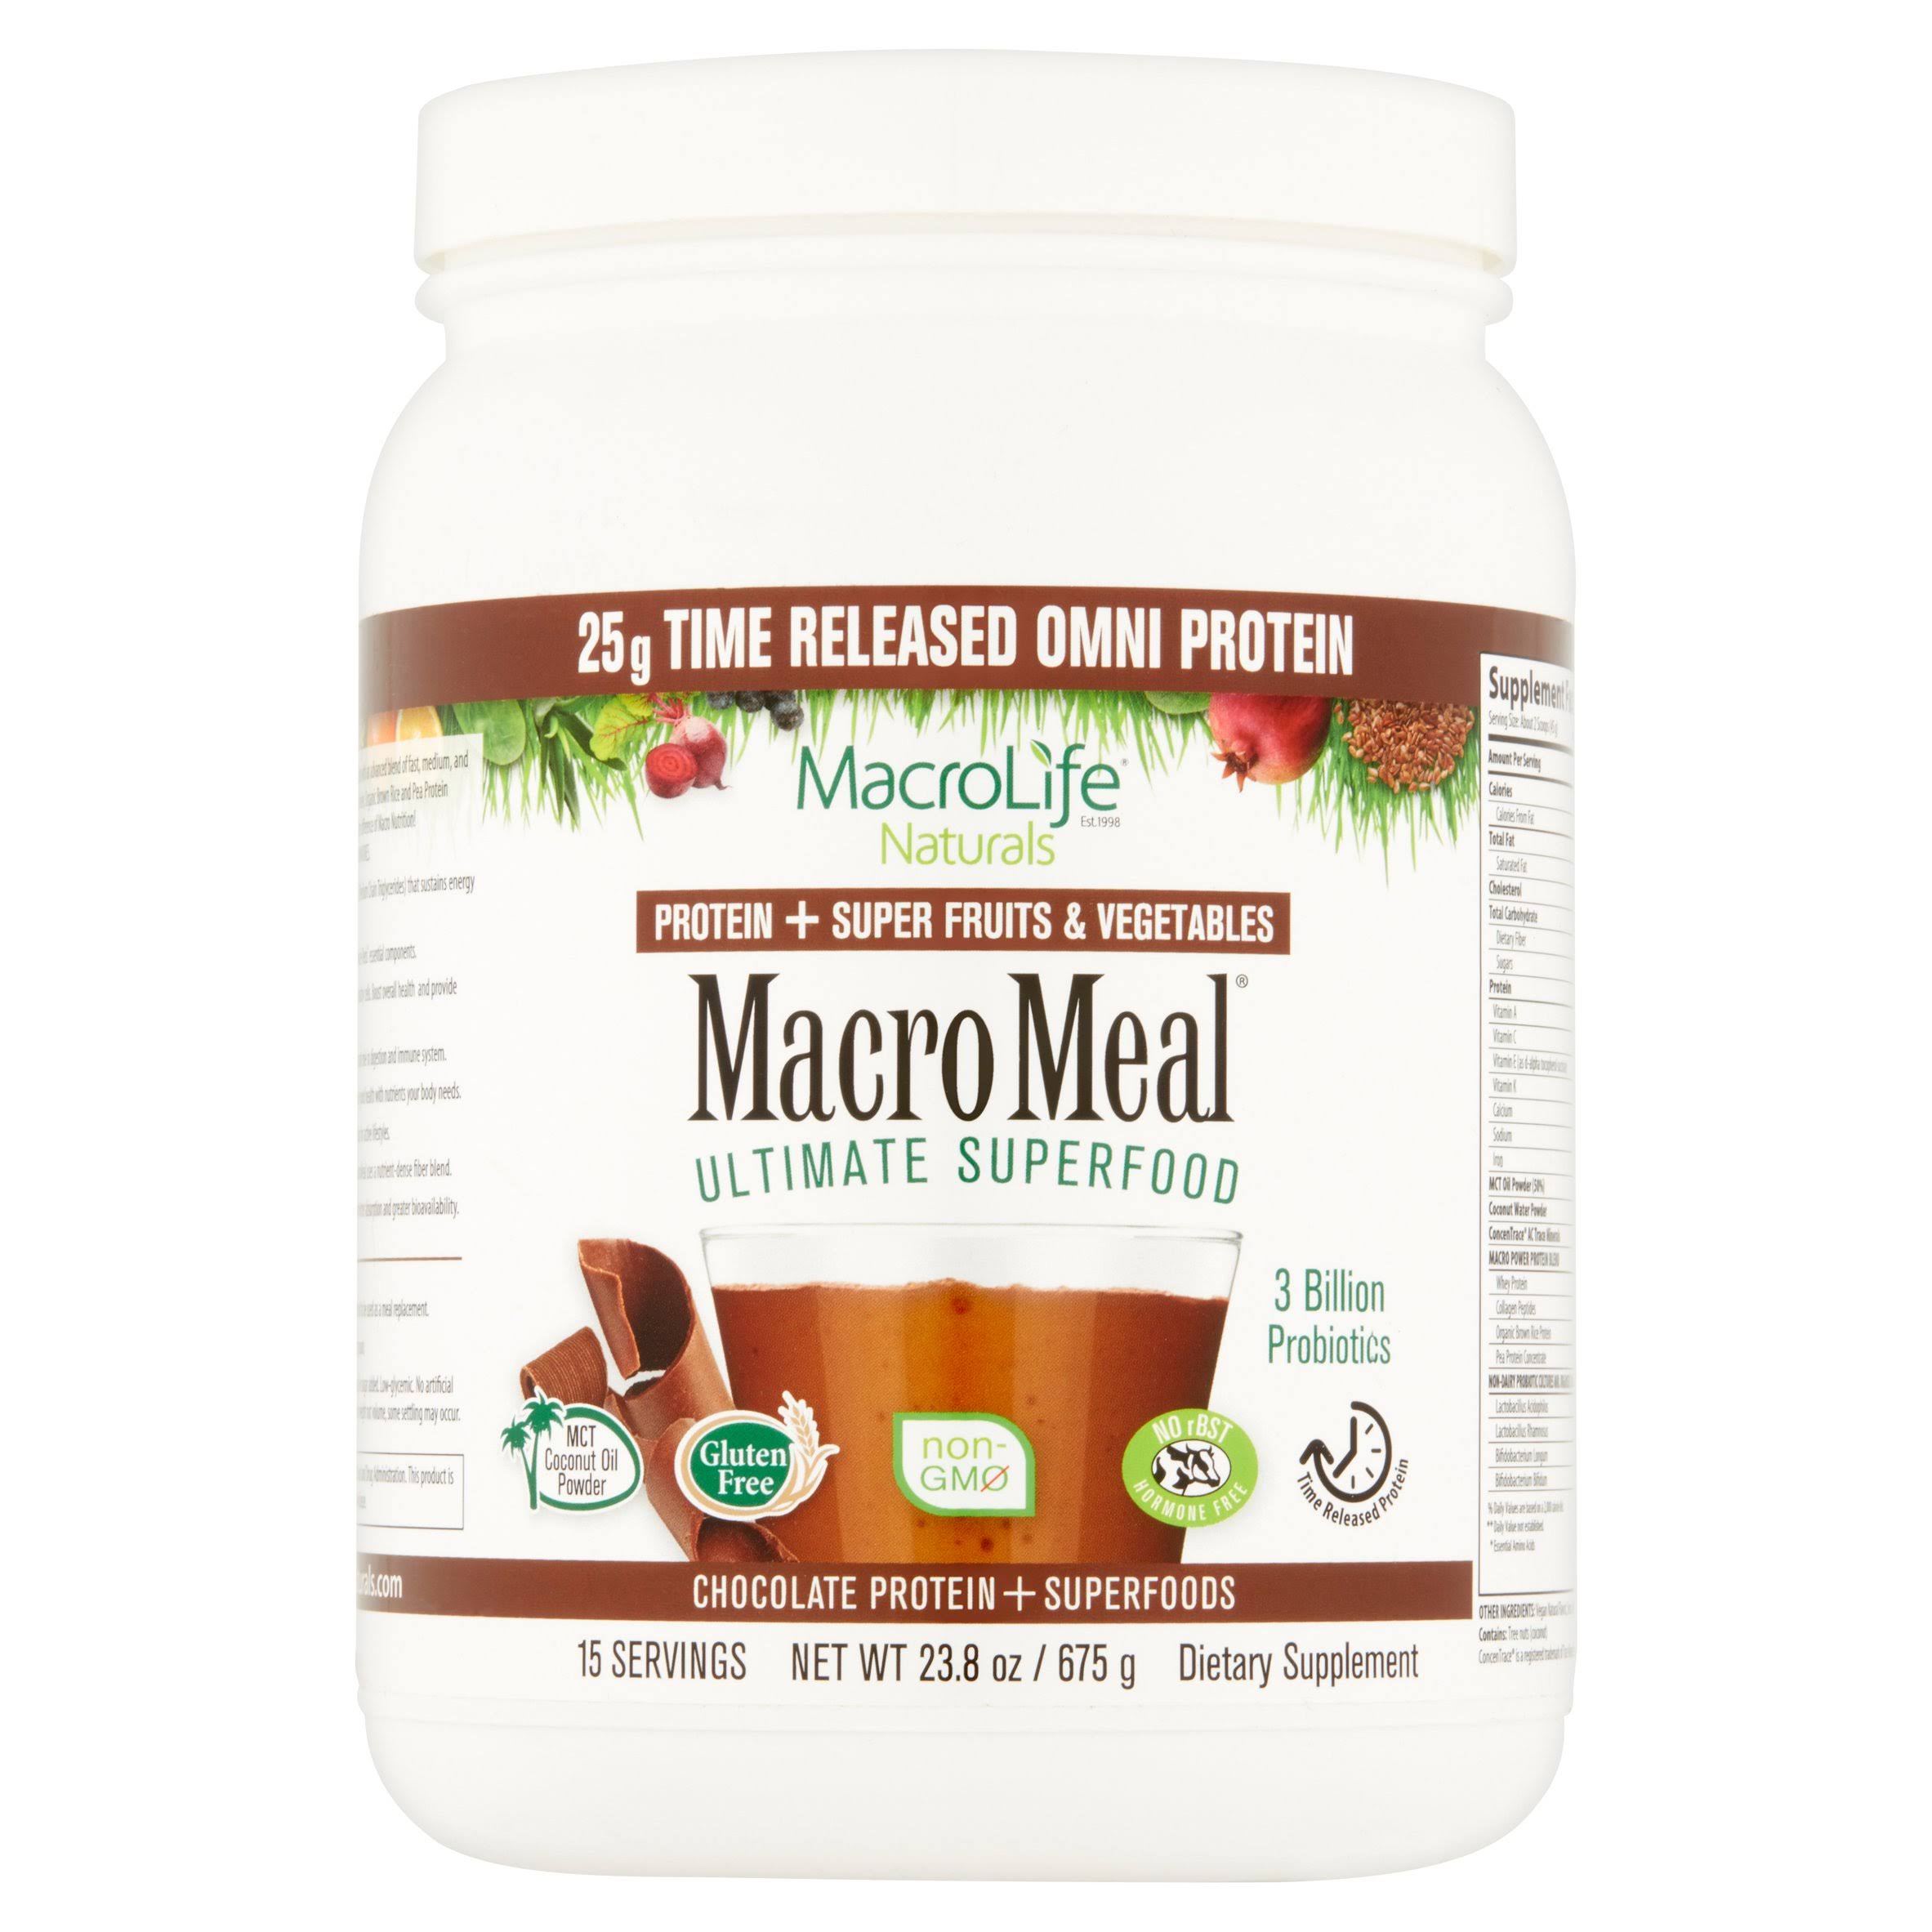 Macrolife Naturals Macro Meal Superfood - Chocolate